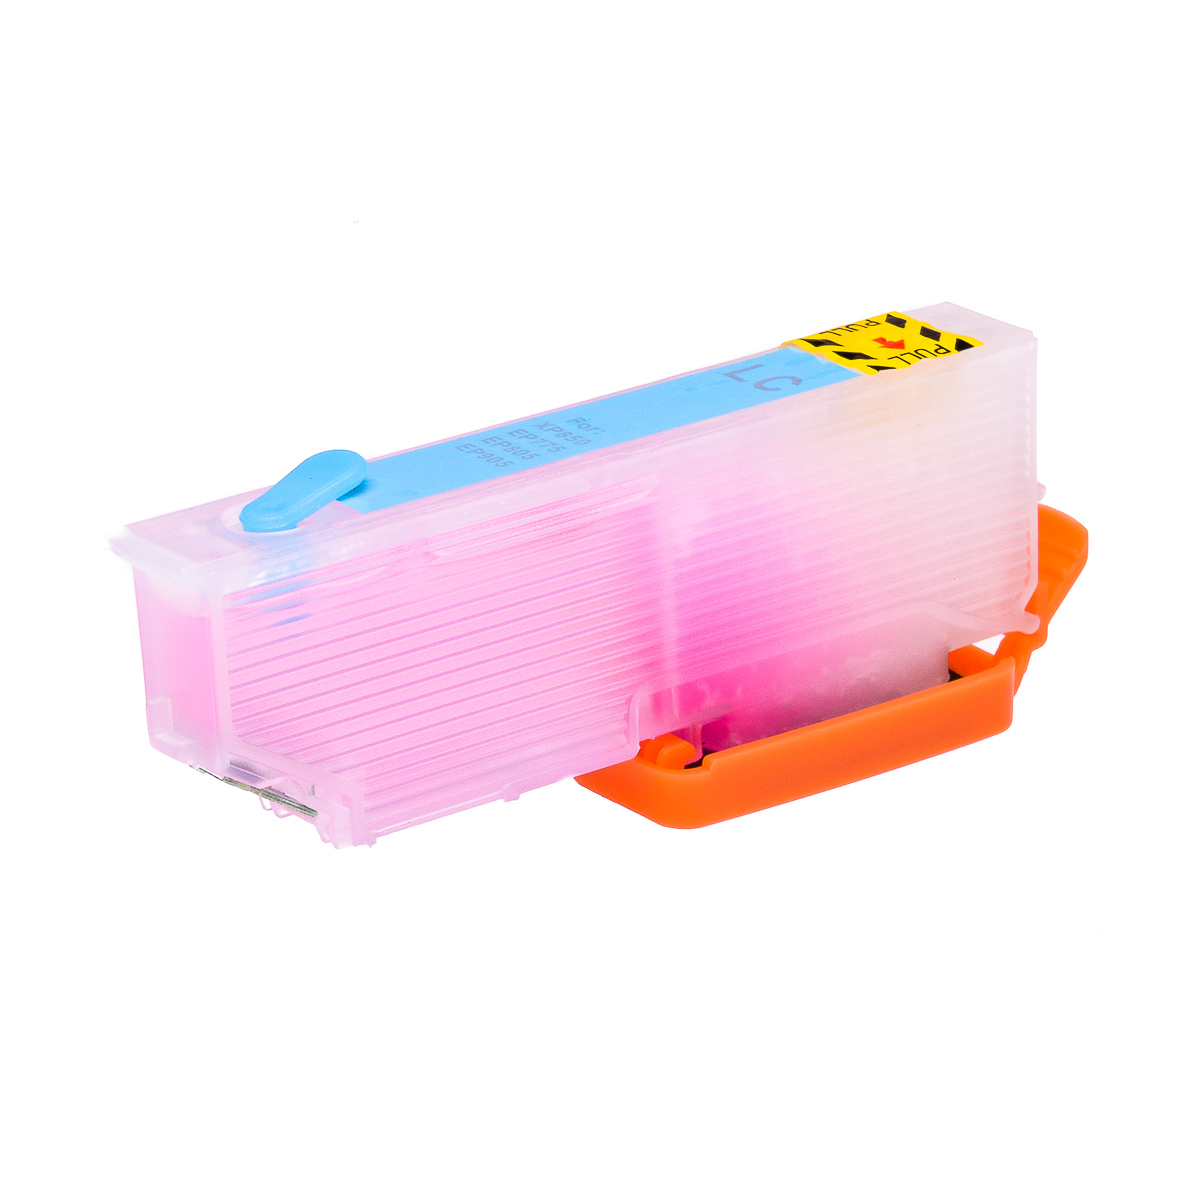 Light Cyan printhead cleaning cartridge for Epson XP-8500 printer